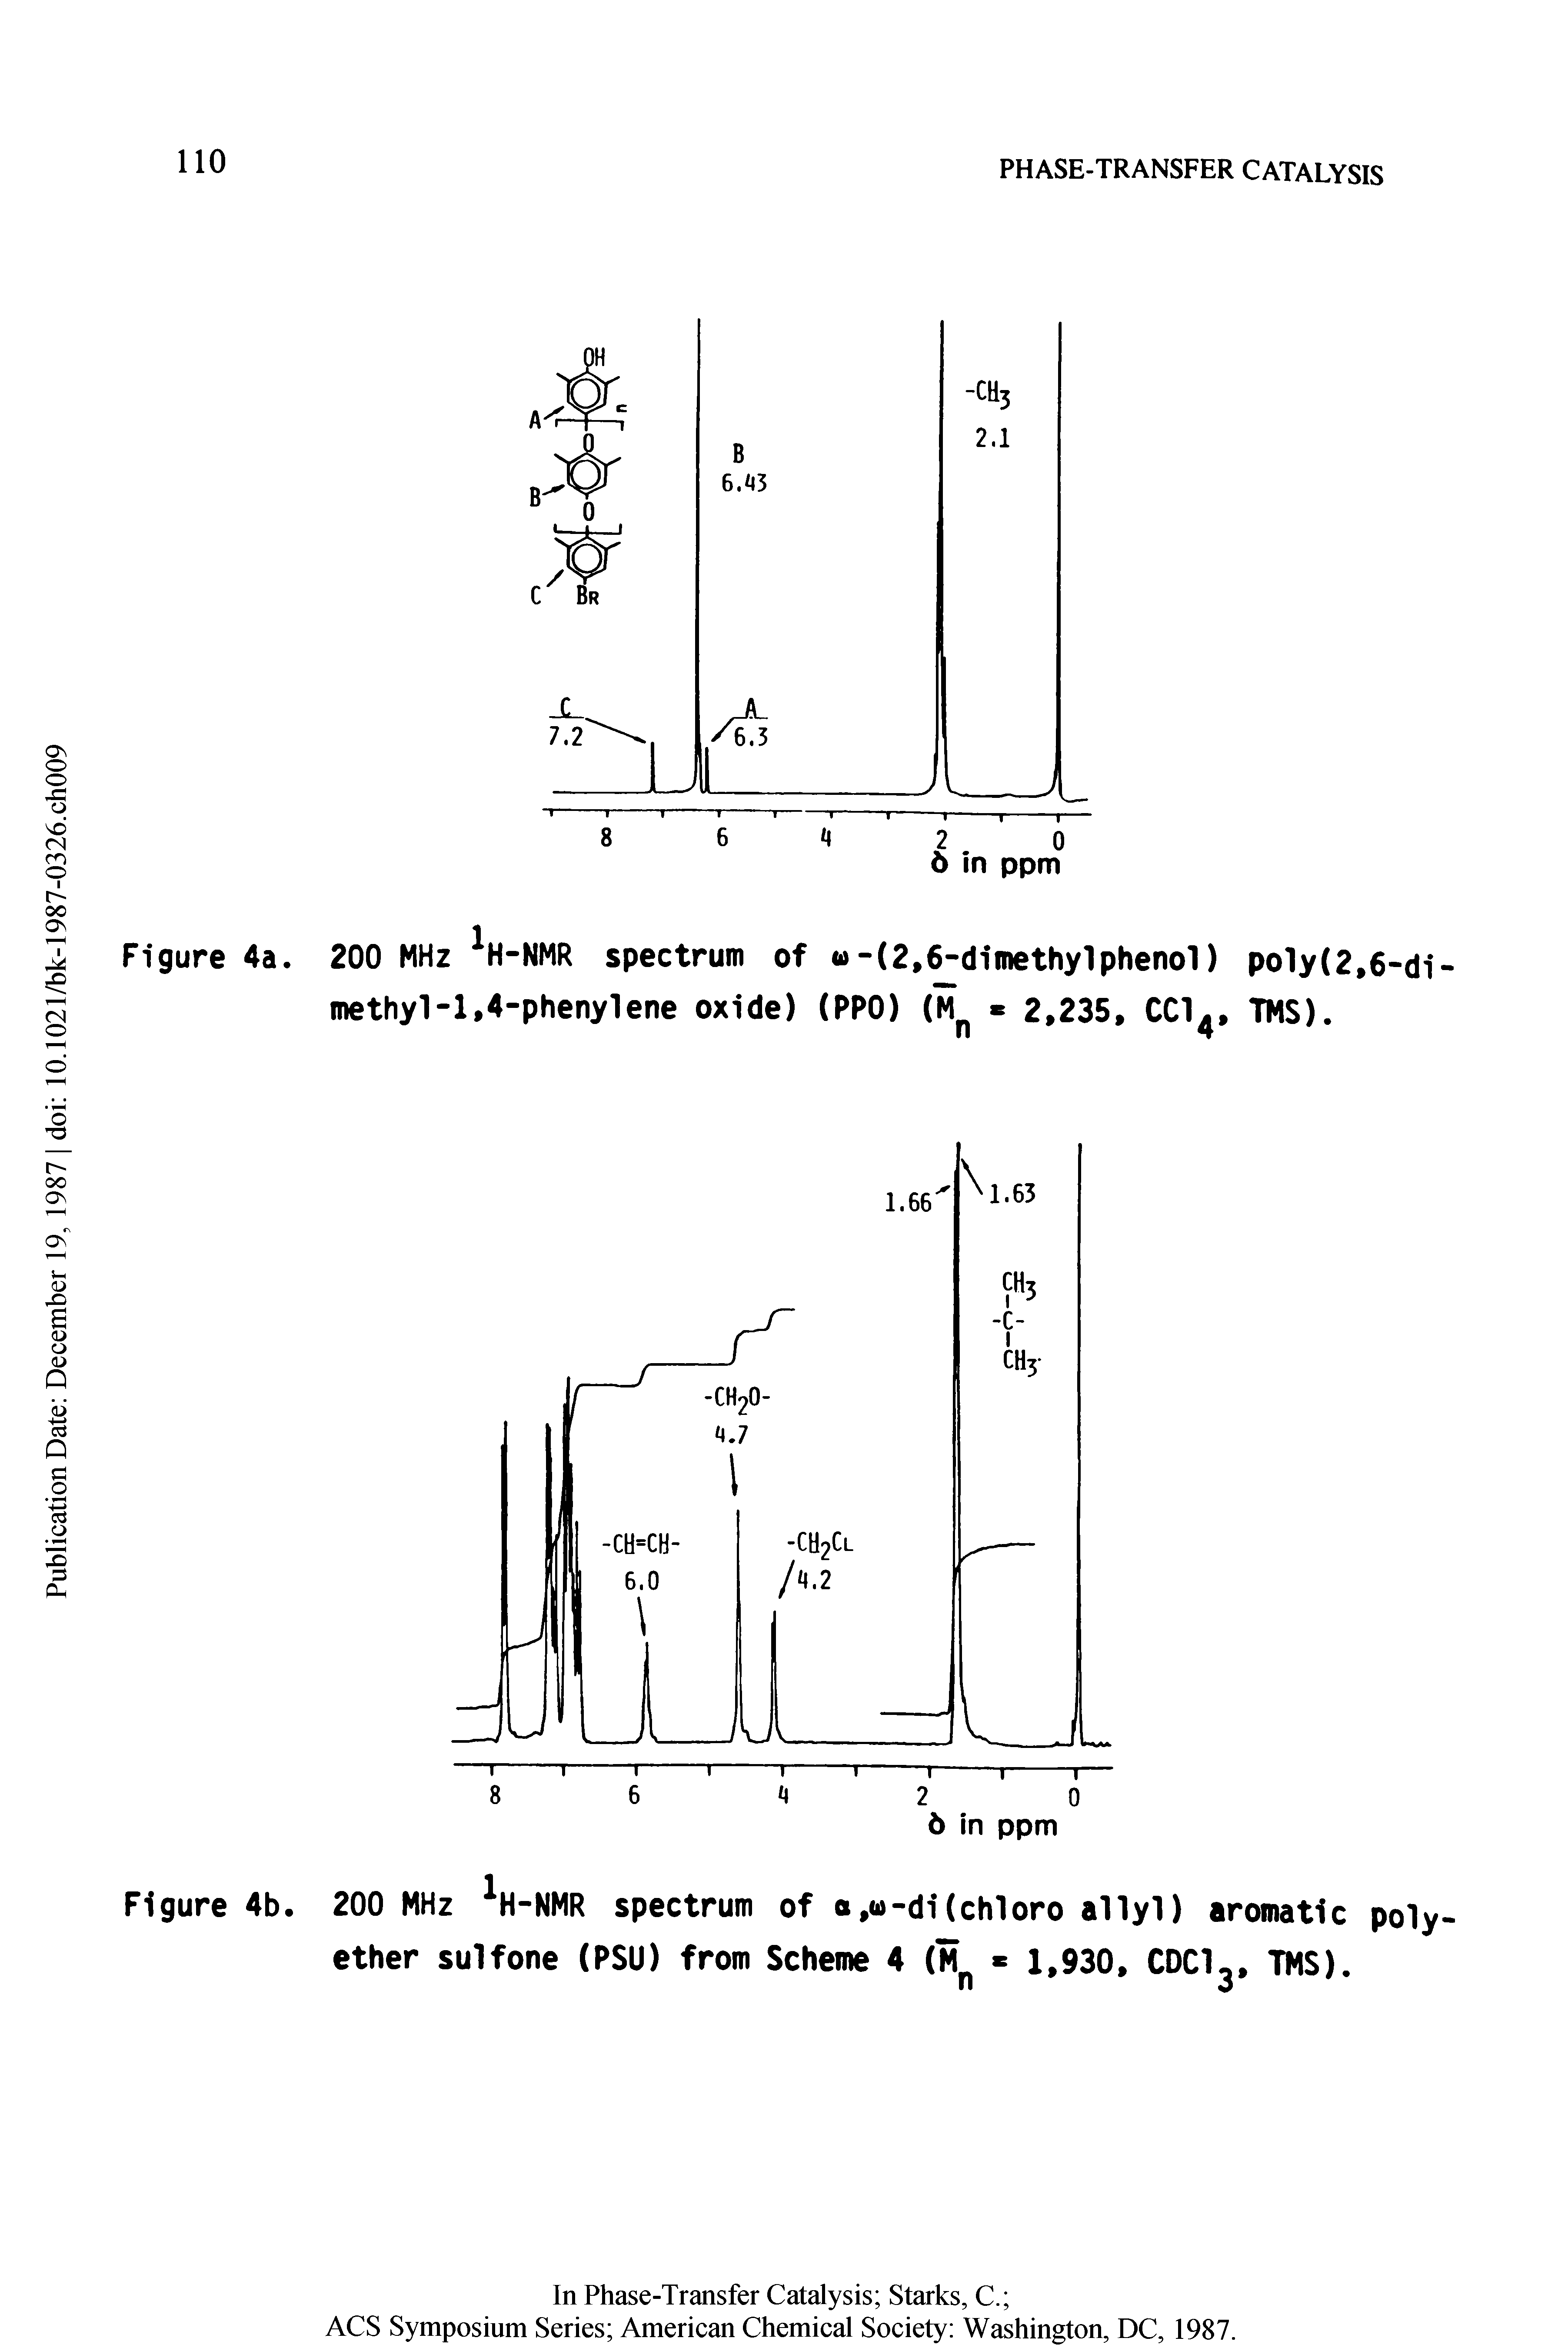 Figure 4b. 200 MHz H-NMR spectrum of o,w-di(chloro allyl) aromatic polyether sulfone (PSU) from Scheme 4 (M 1,930, CDCI3, IMS).